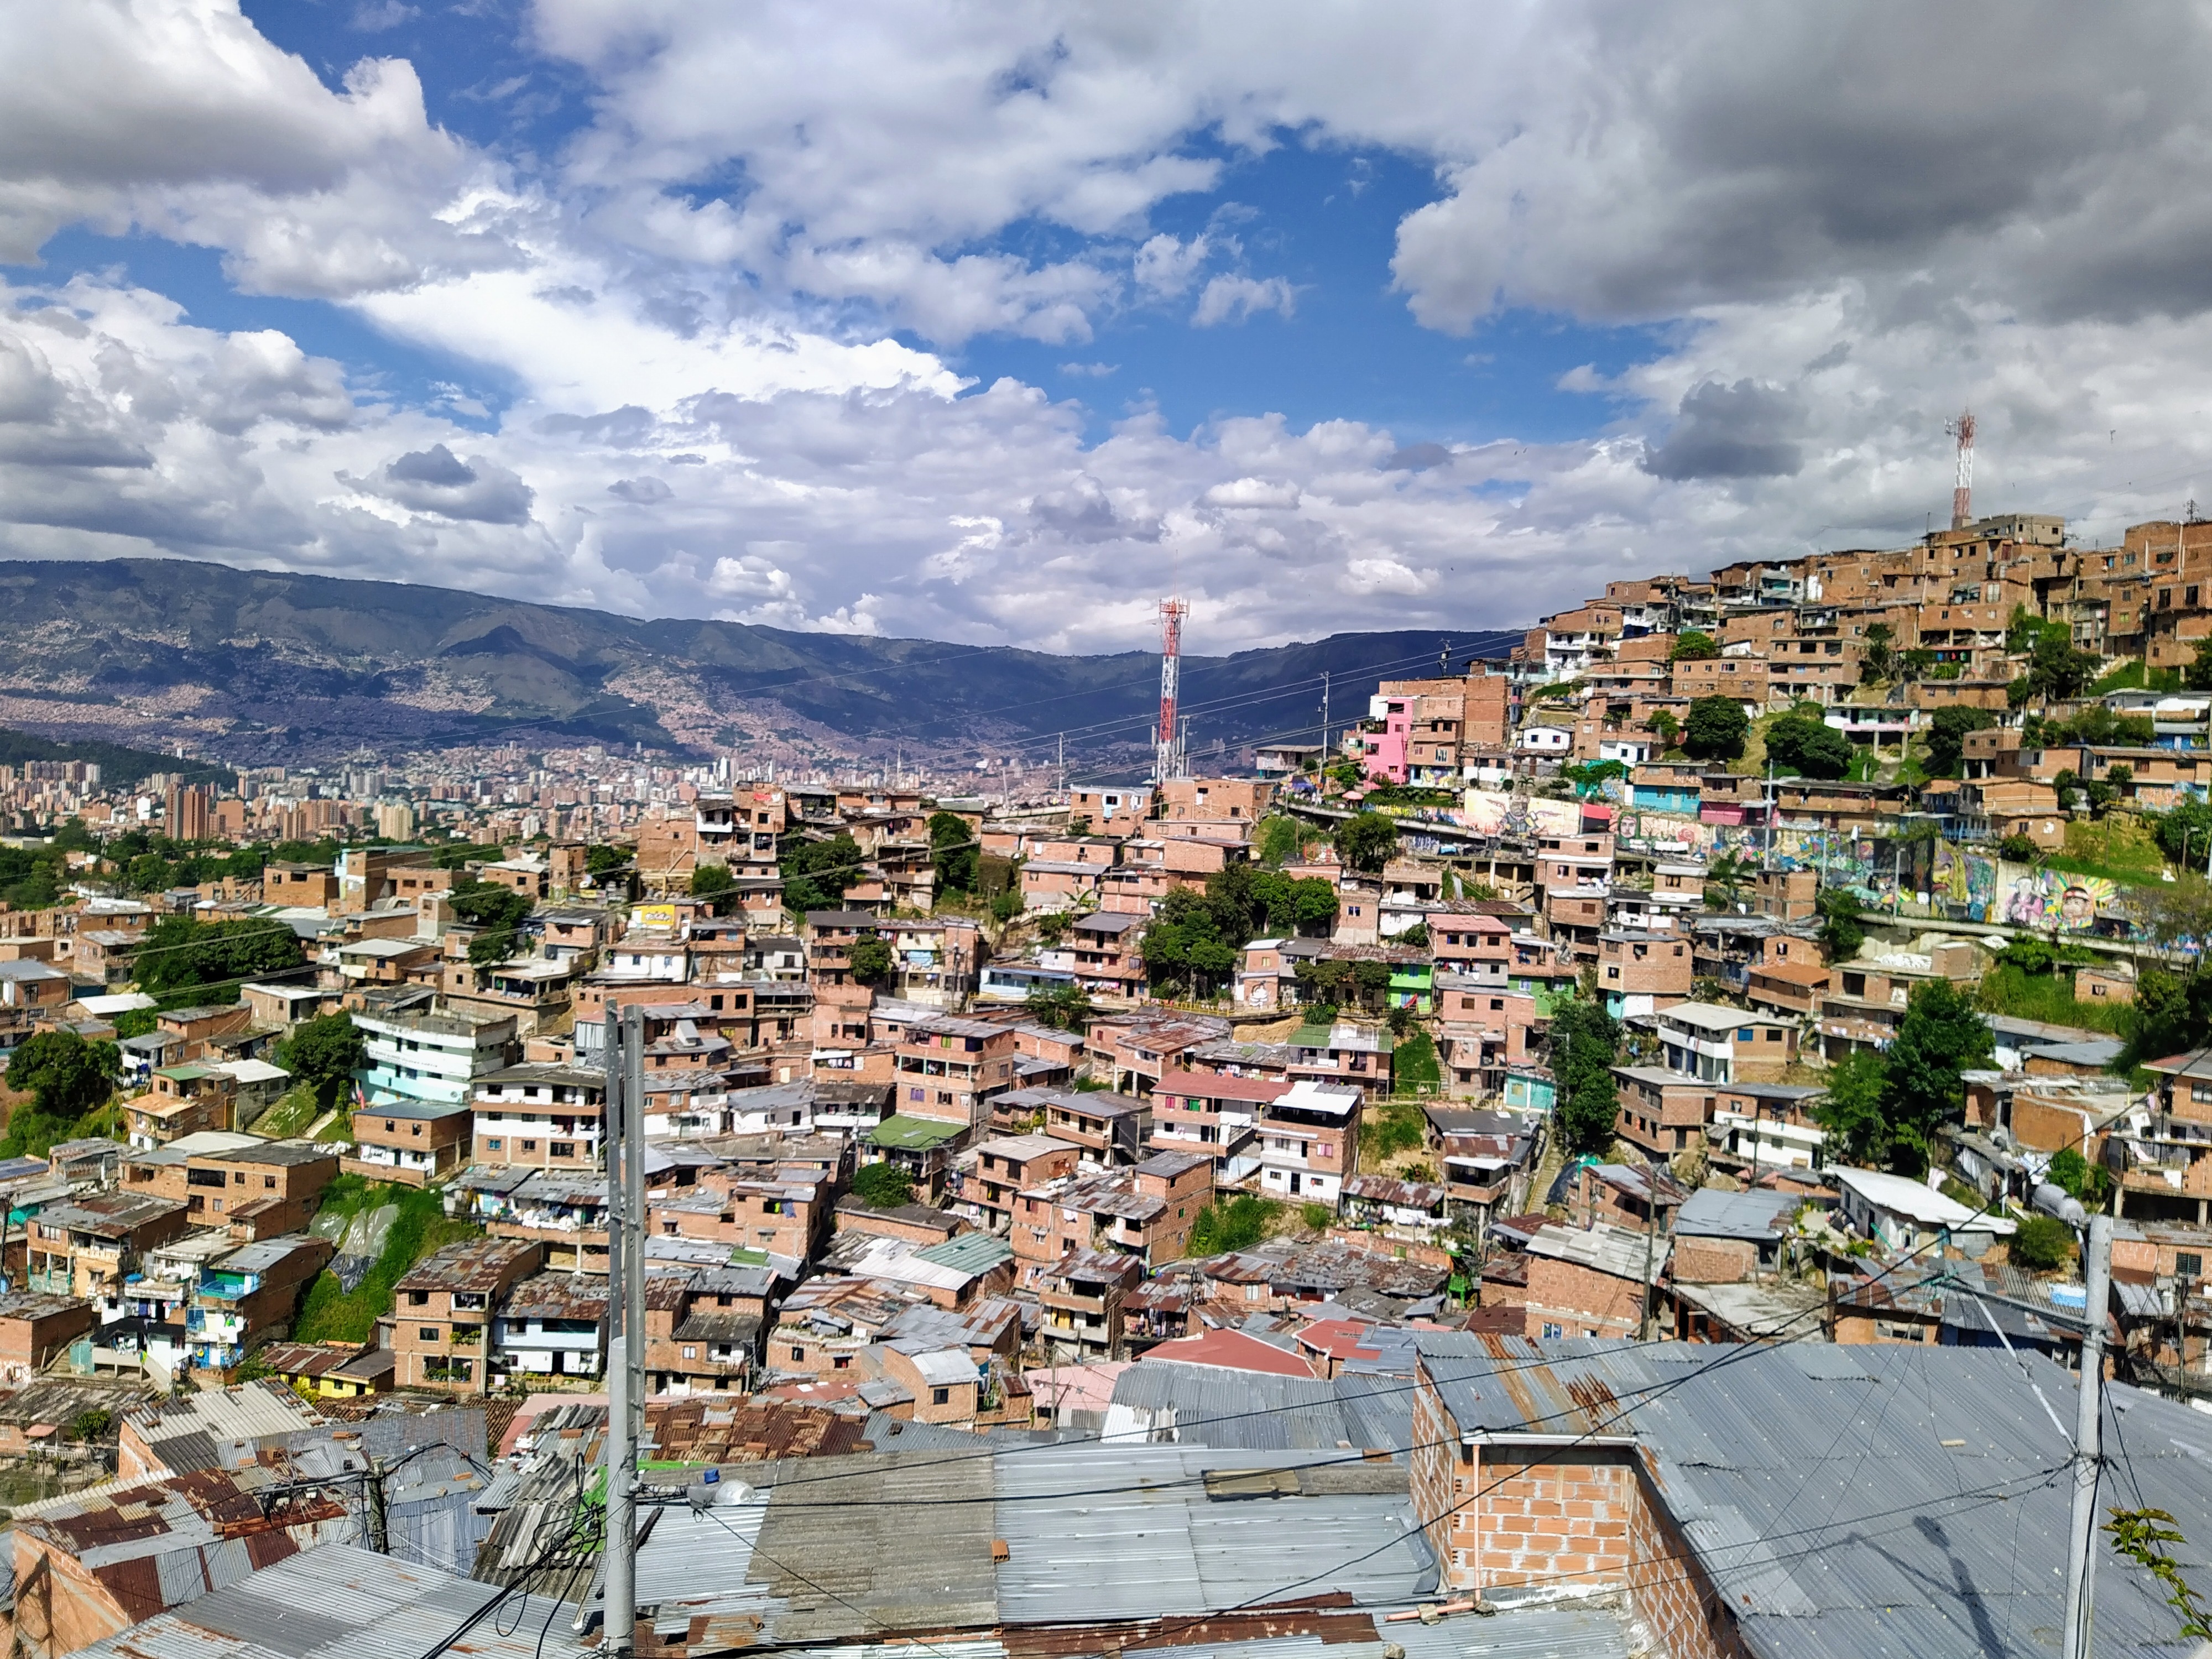 Comuna 13, Medellín, Colombia